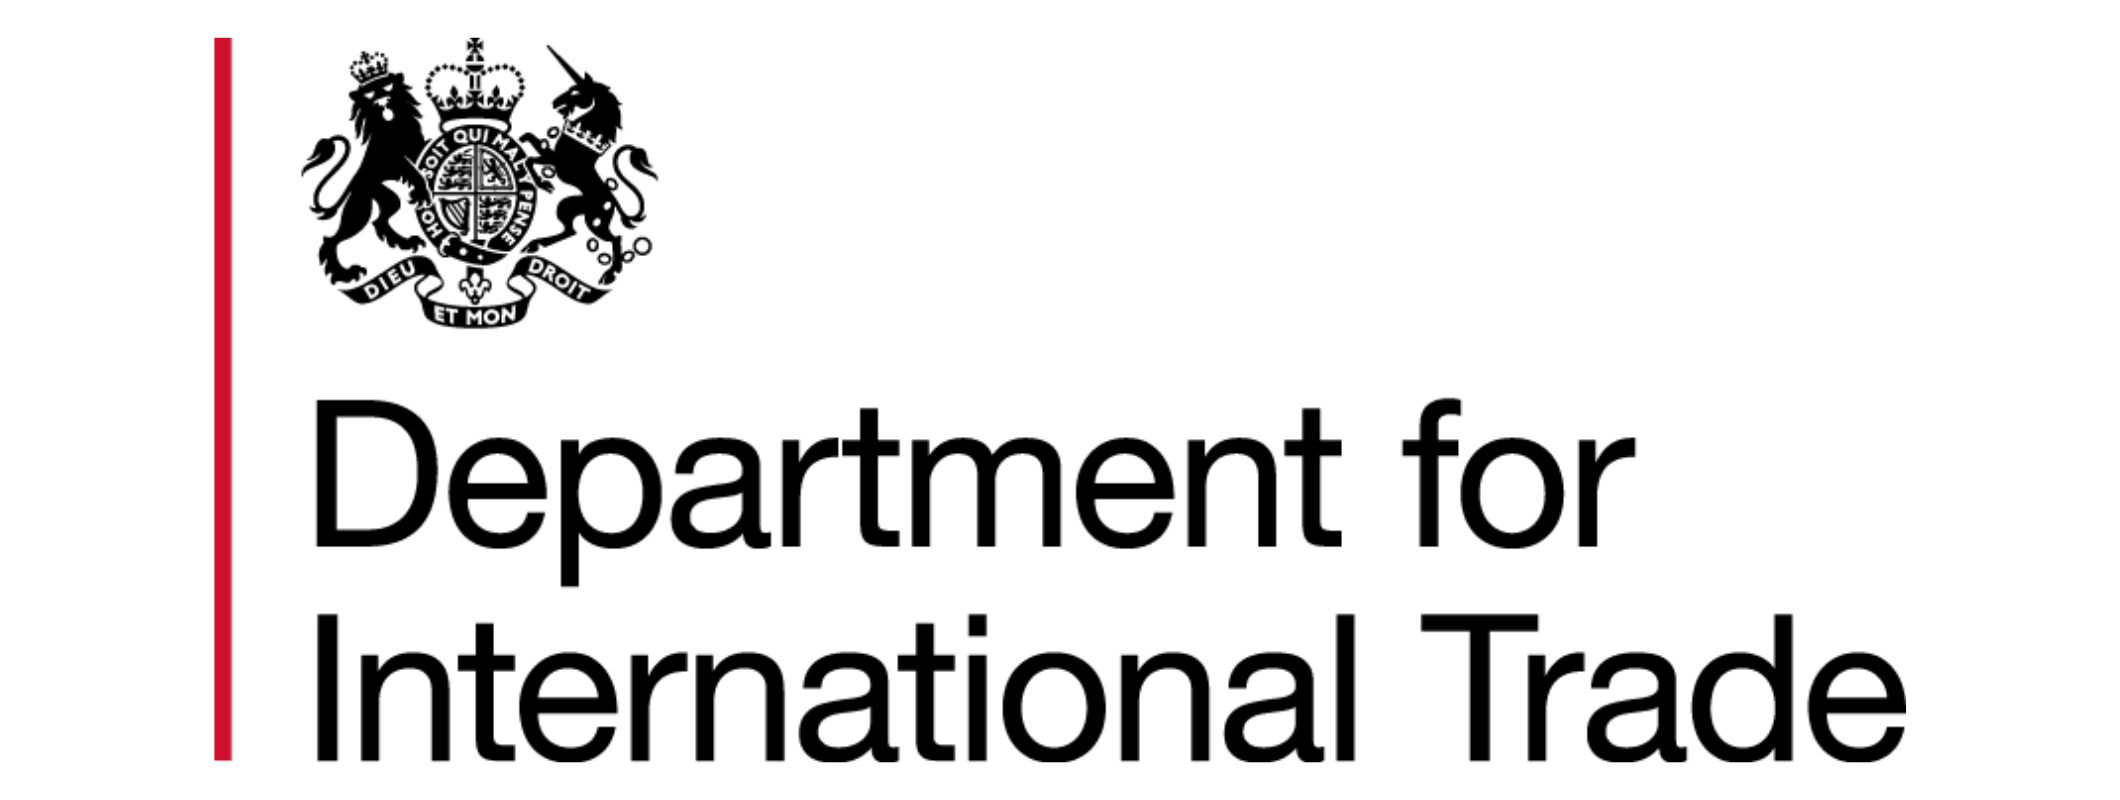 Department for International Trade-1